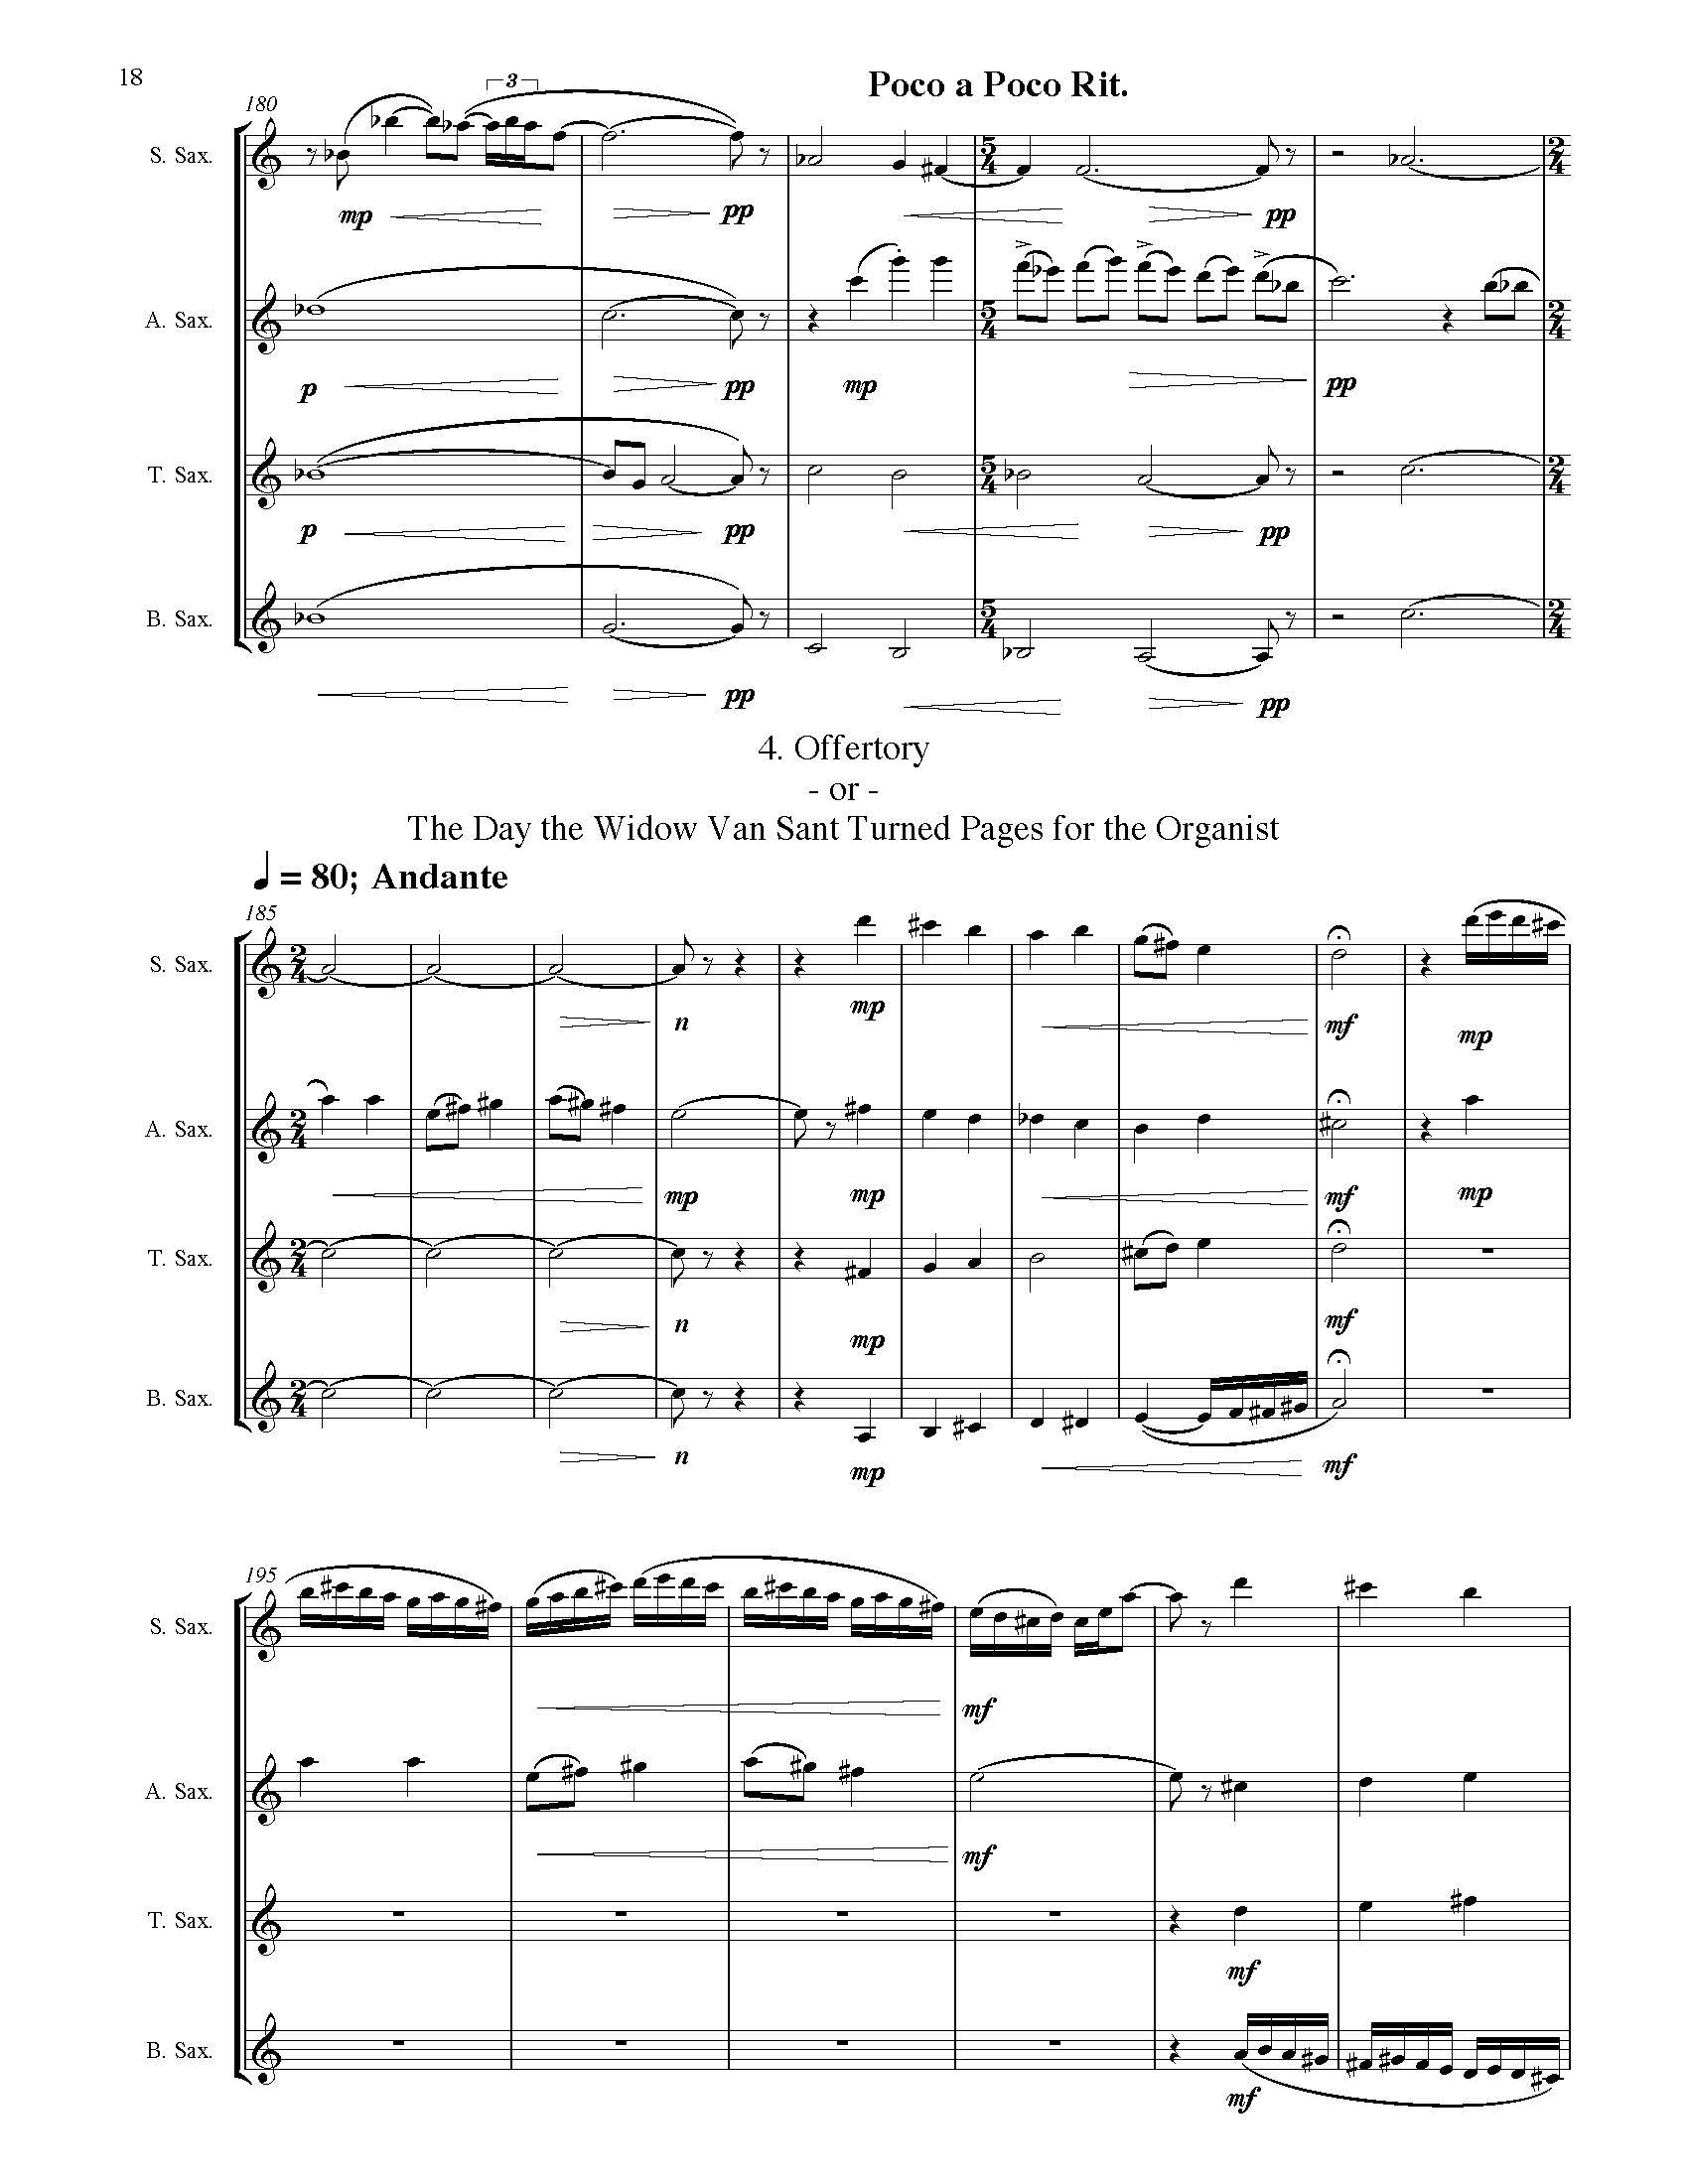 The Revivalist - Complete Score_Page_26.jpg